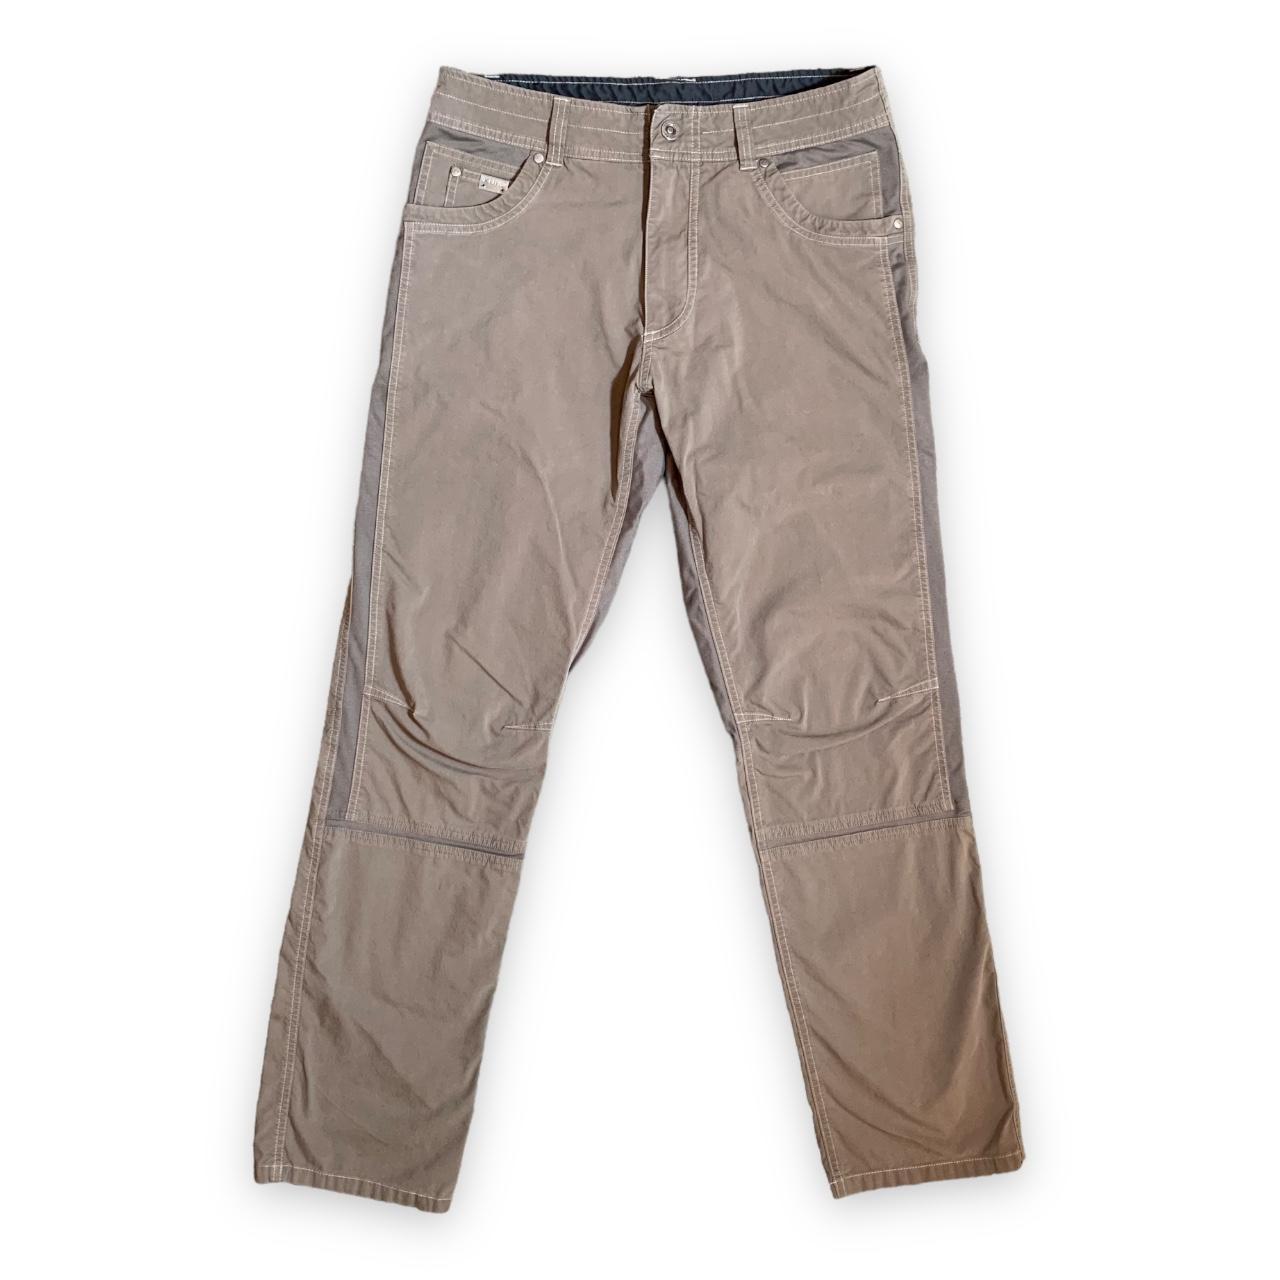 KÜHL Men's Brown Trousers (2)